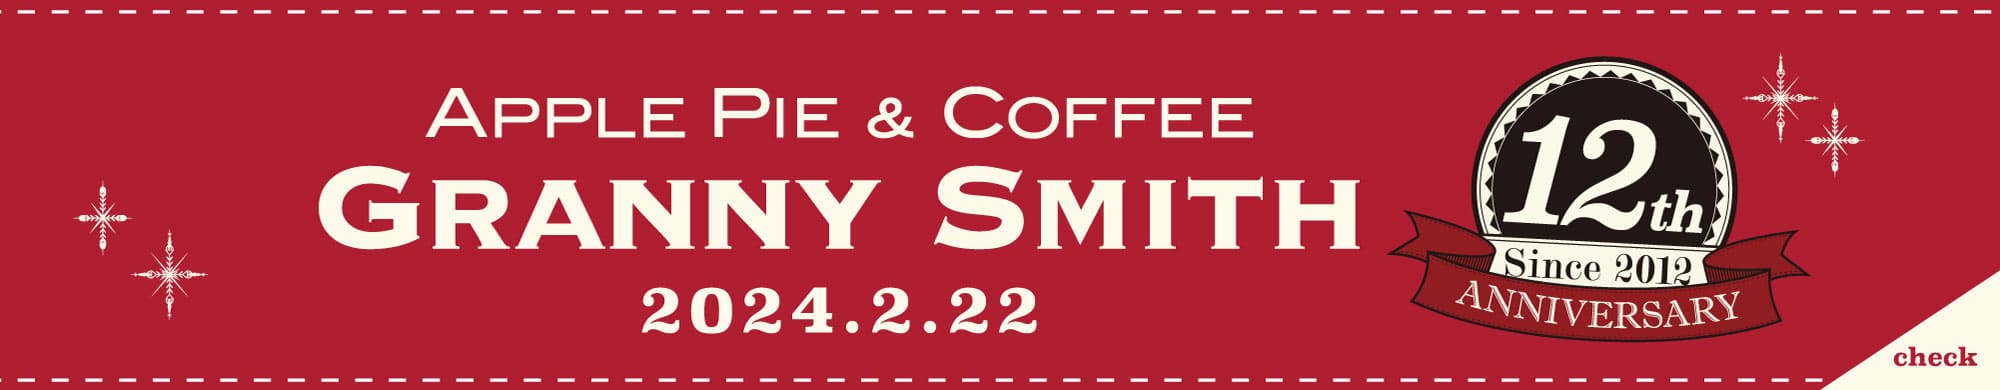 GRANNY SMITH APPLE PIE & COFFEE 12th ANNIVERSARY